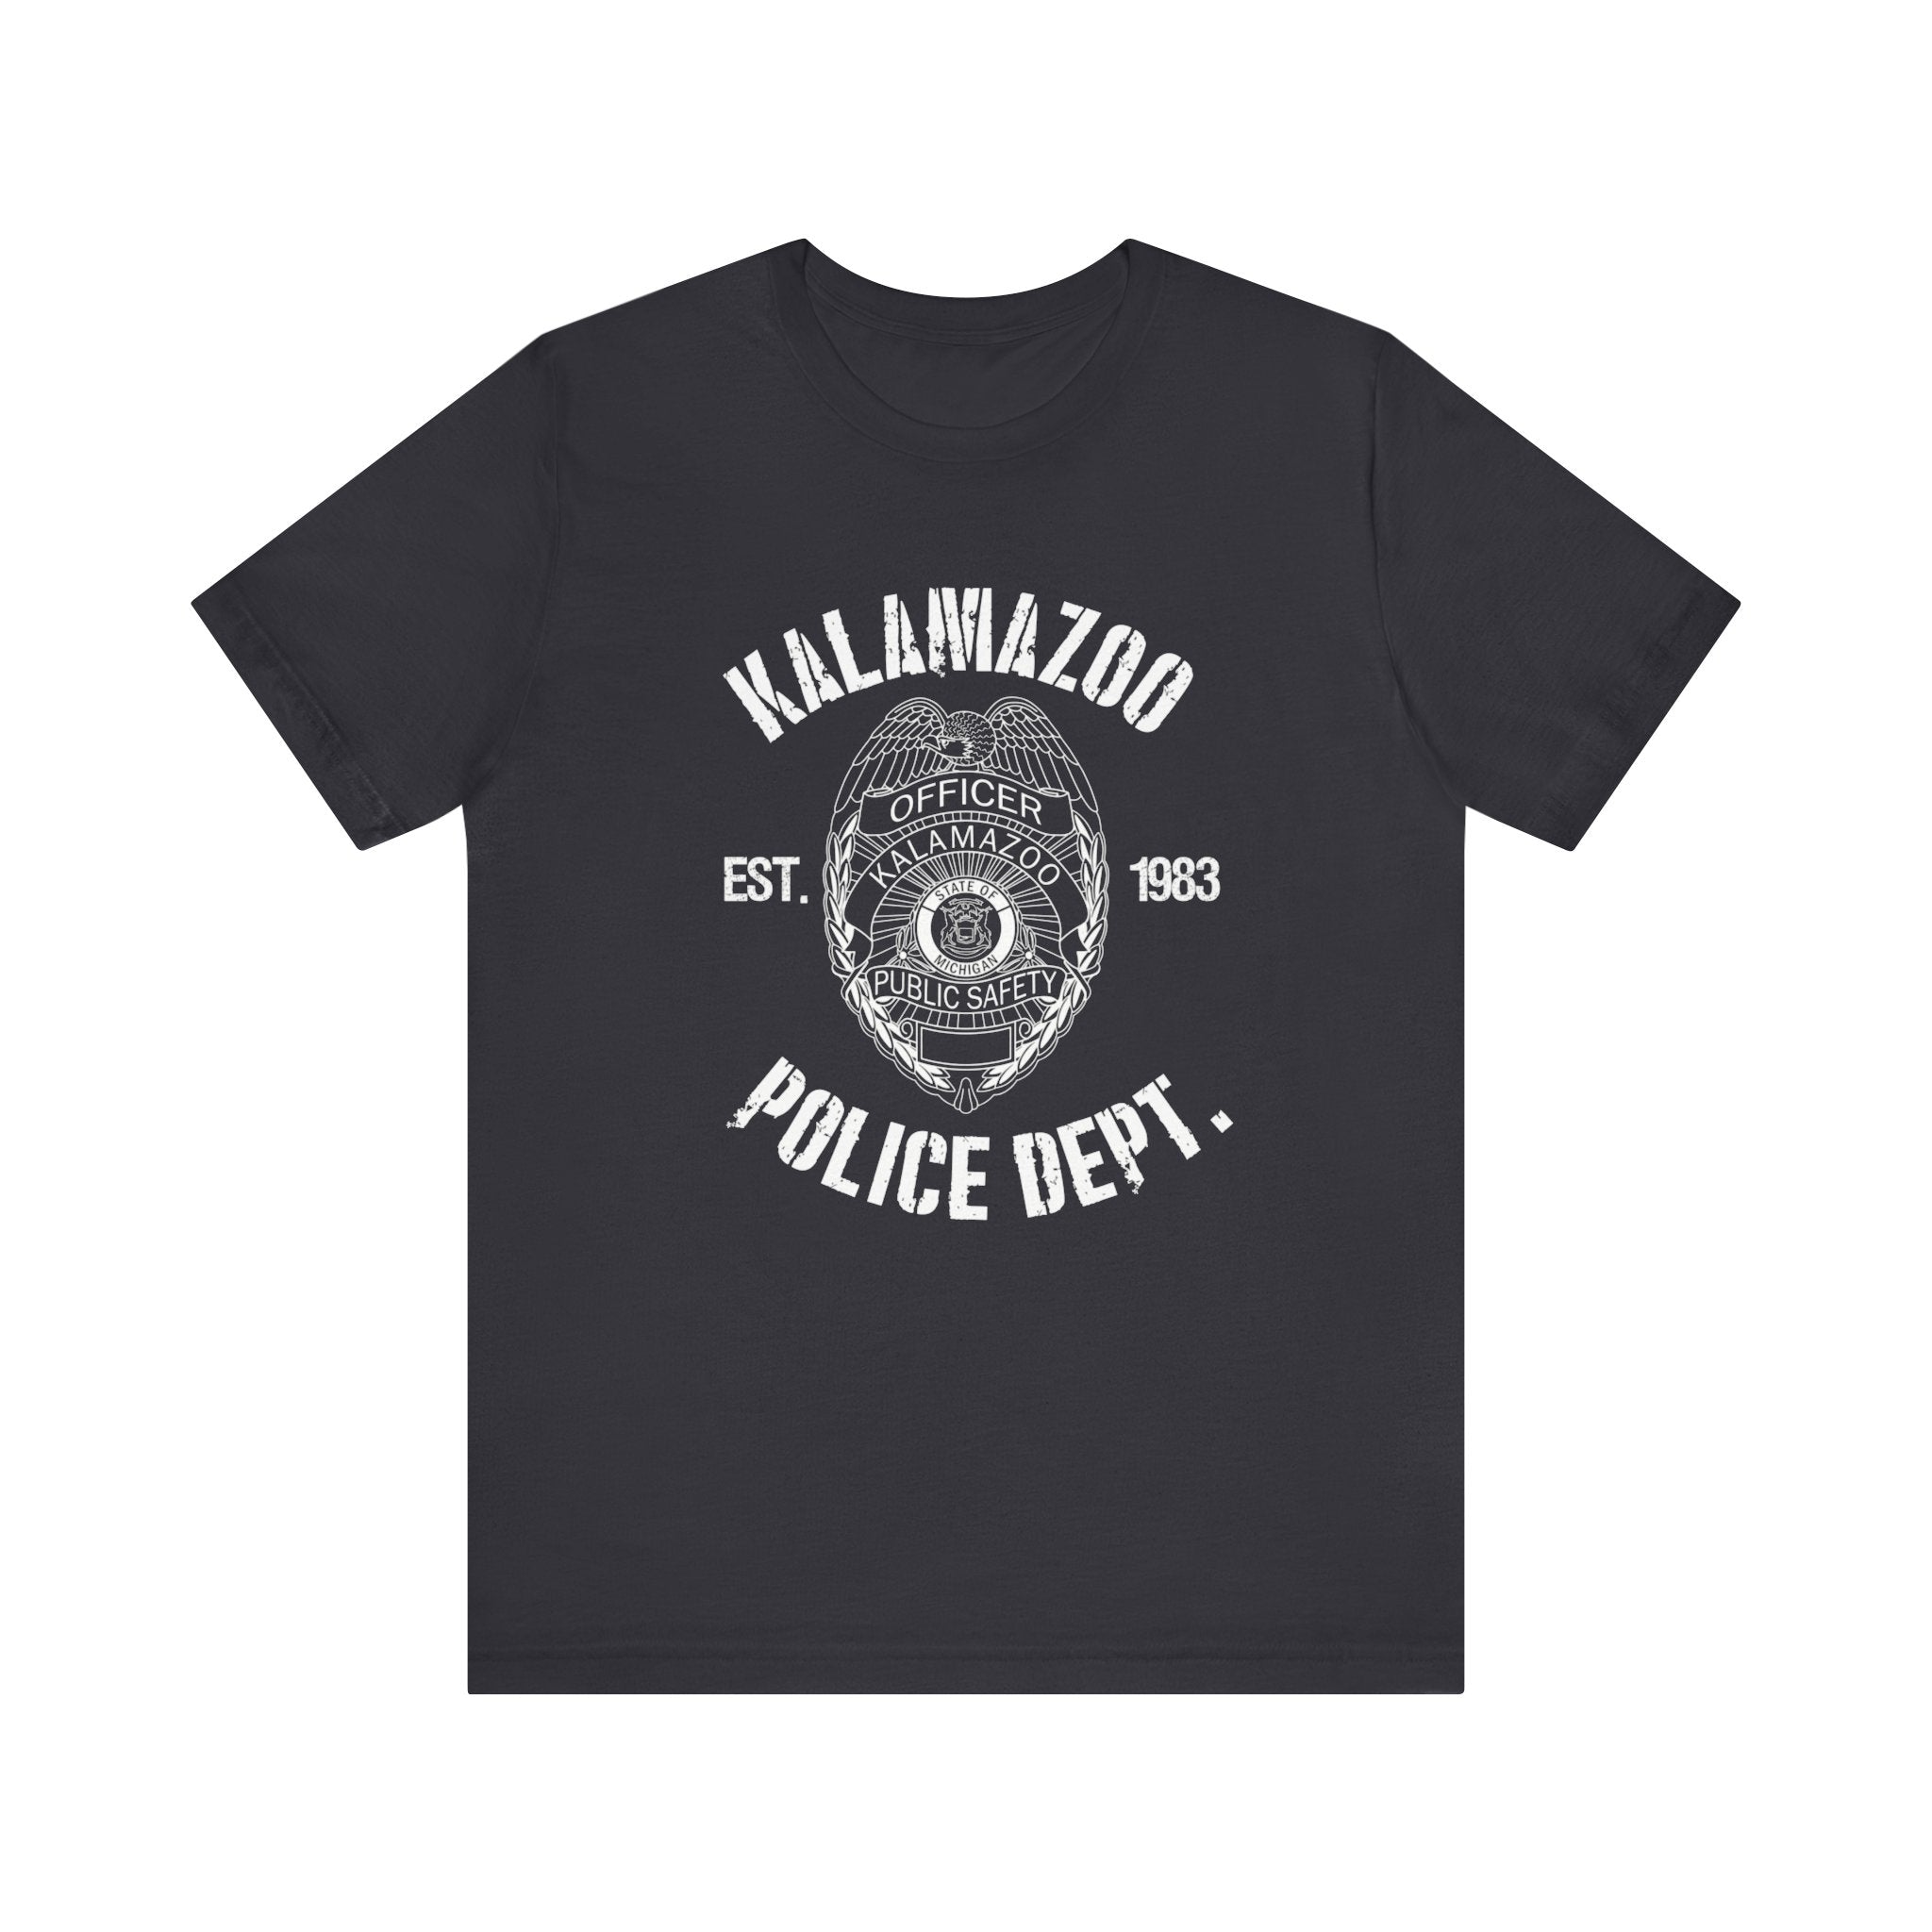 Kalamazoo Police Department Badge Tee